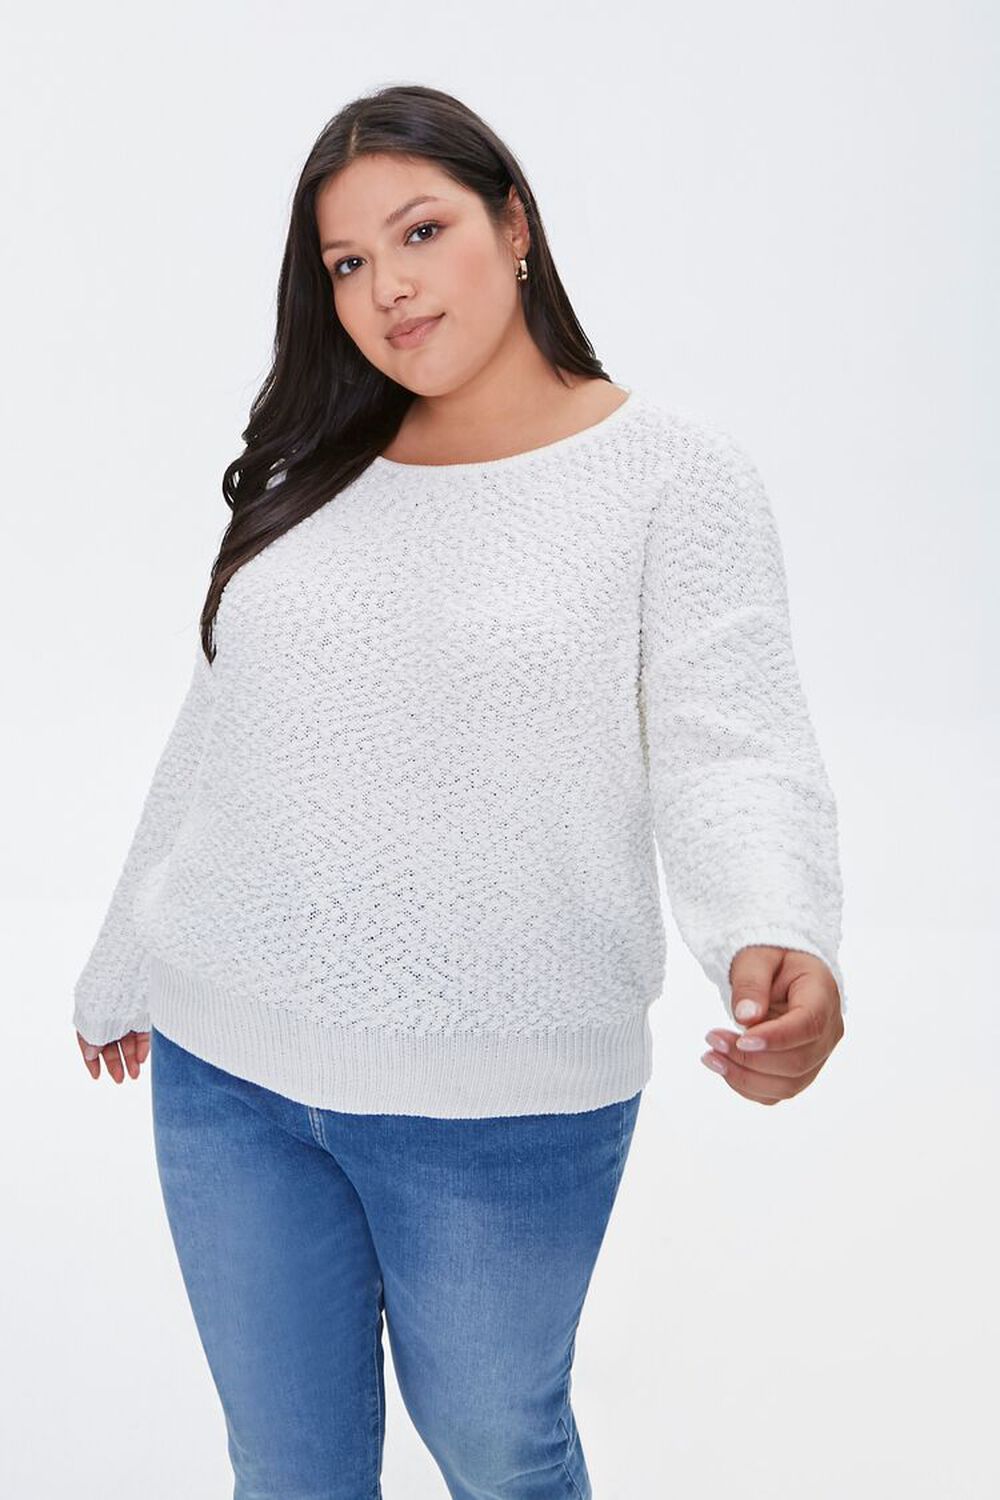 WHITE Plus Size Popcorn Knit Sweater, image 1